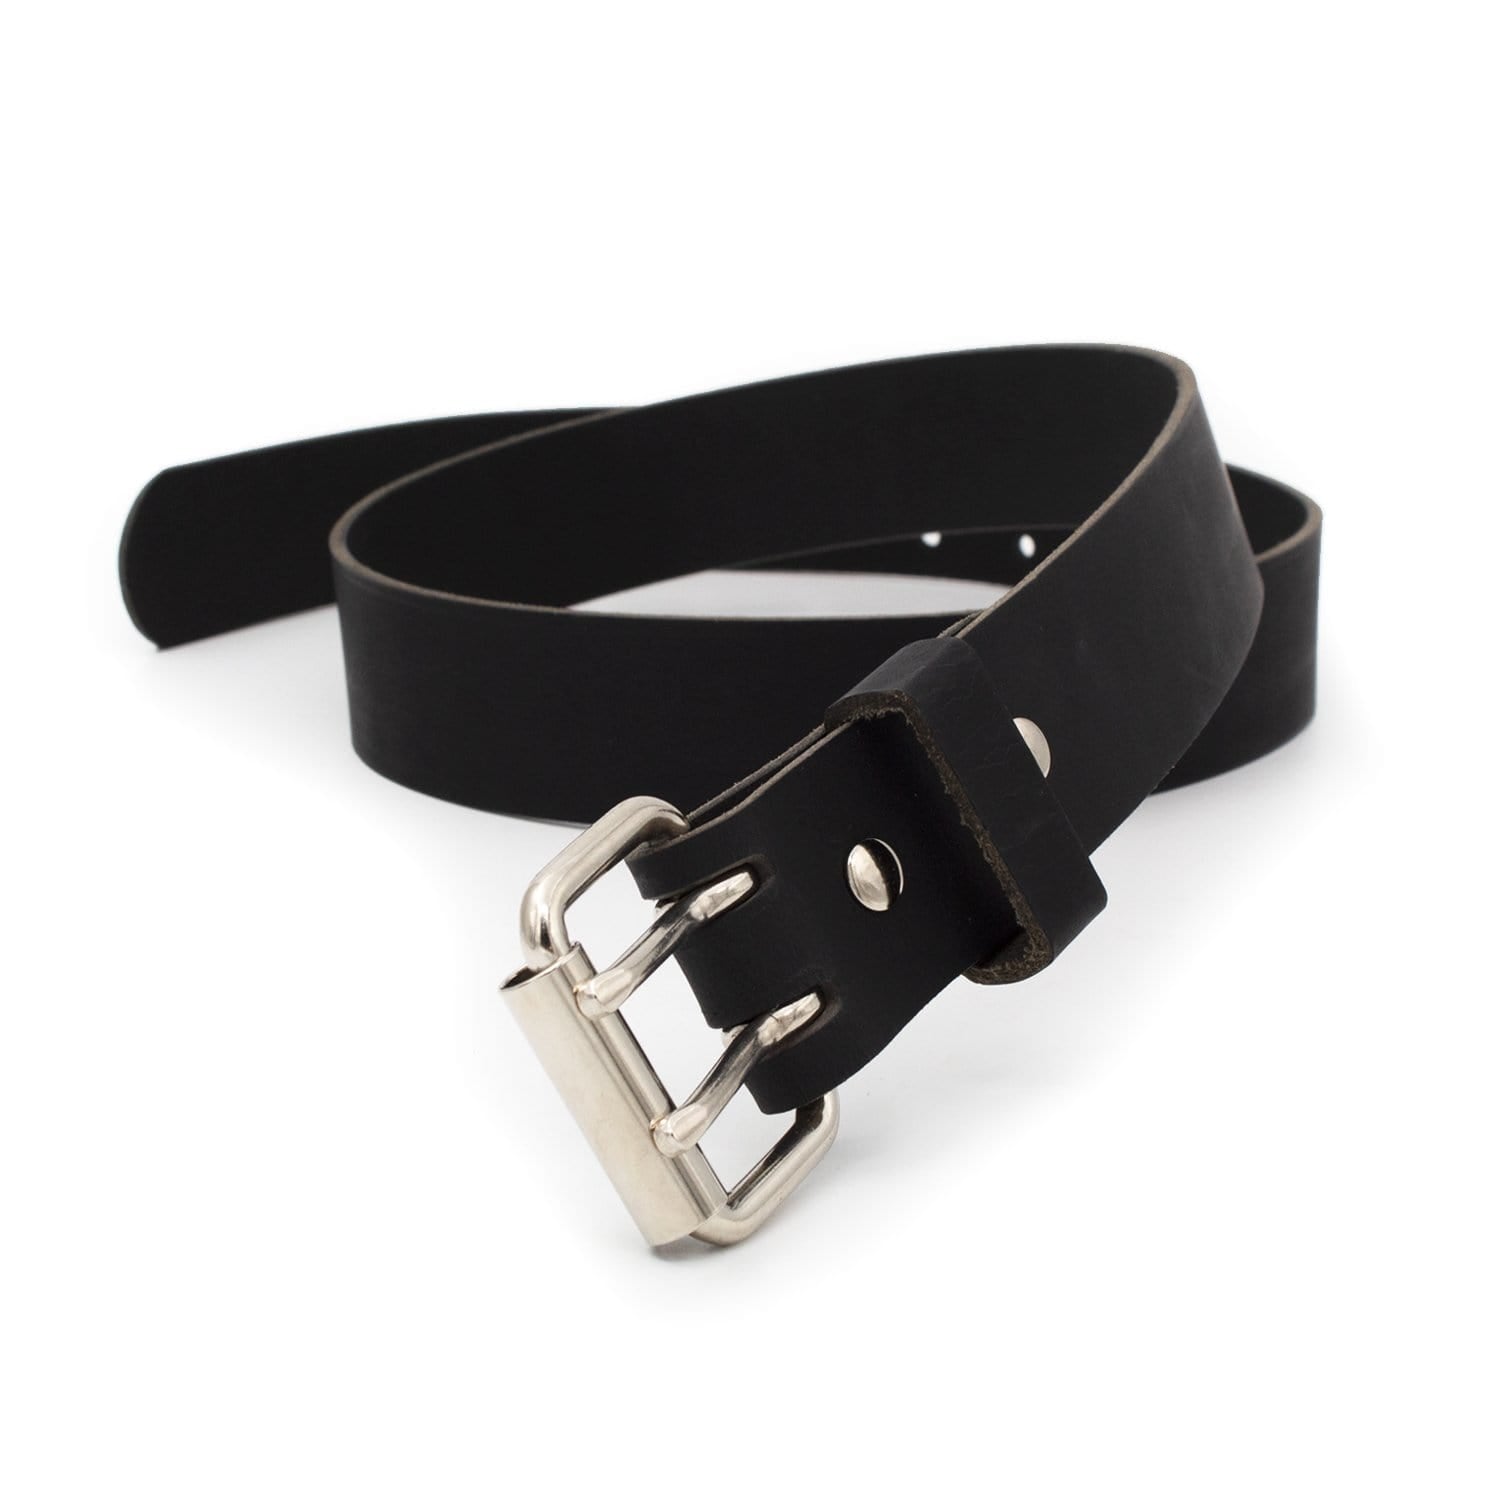 Buy wholesale Full grain leather belt made in france FR305